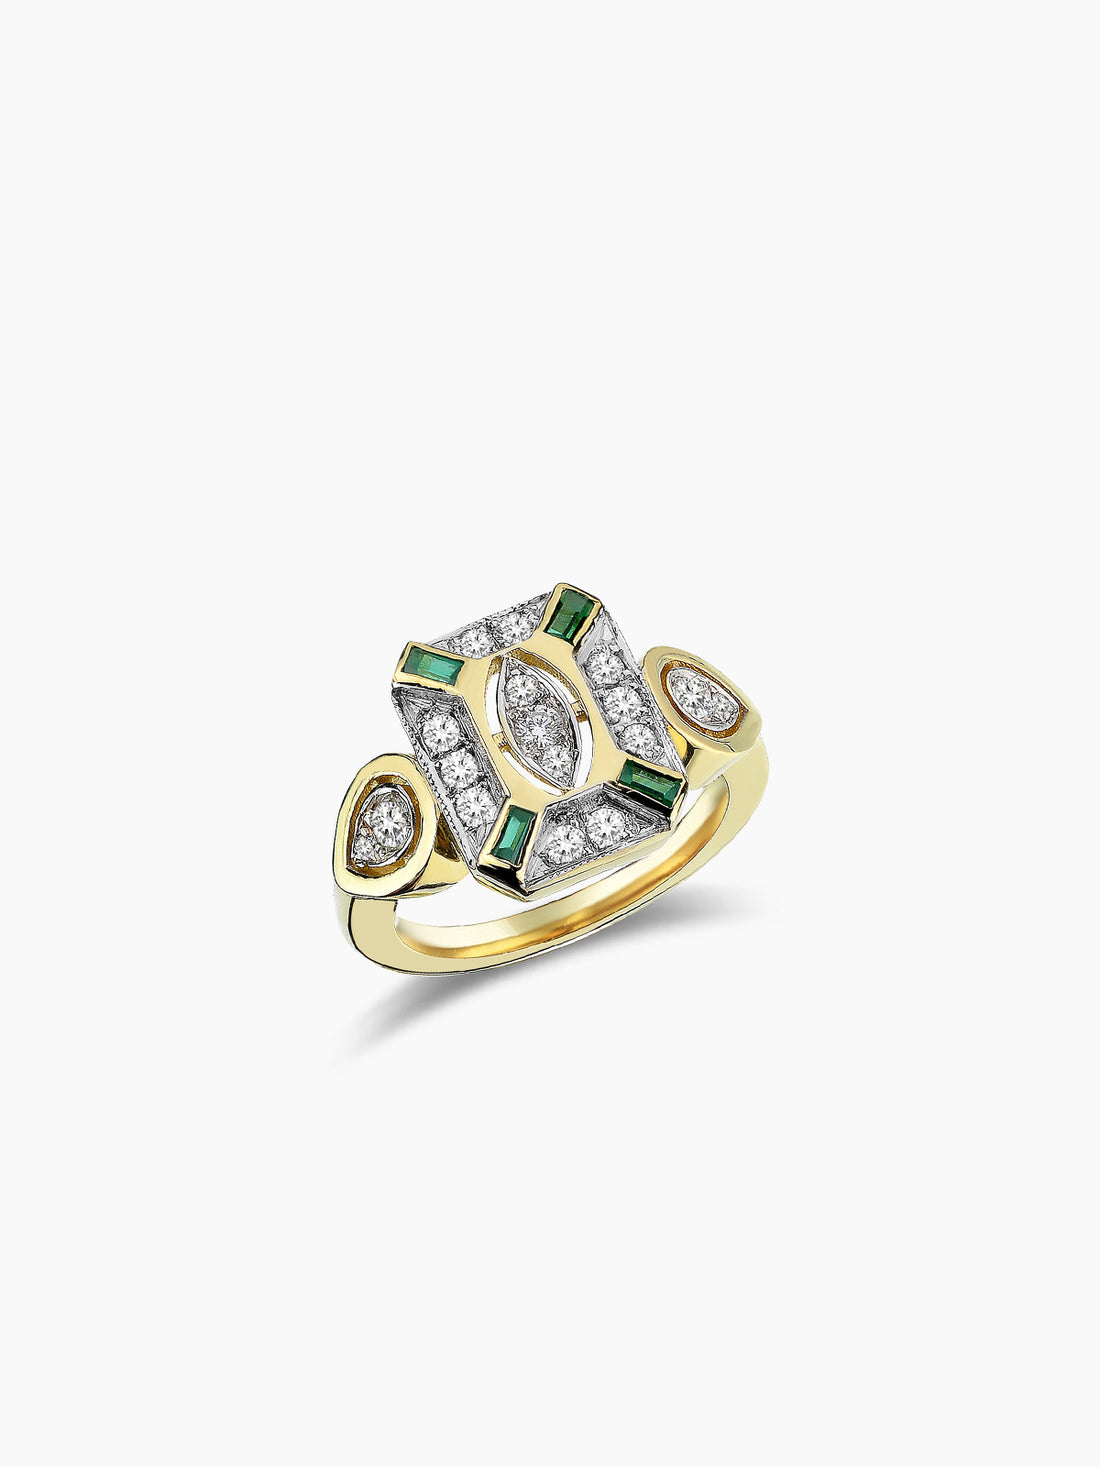 MELIS GORAL Focus Rectangle Tsavorite Diamond Ring